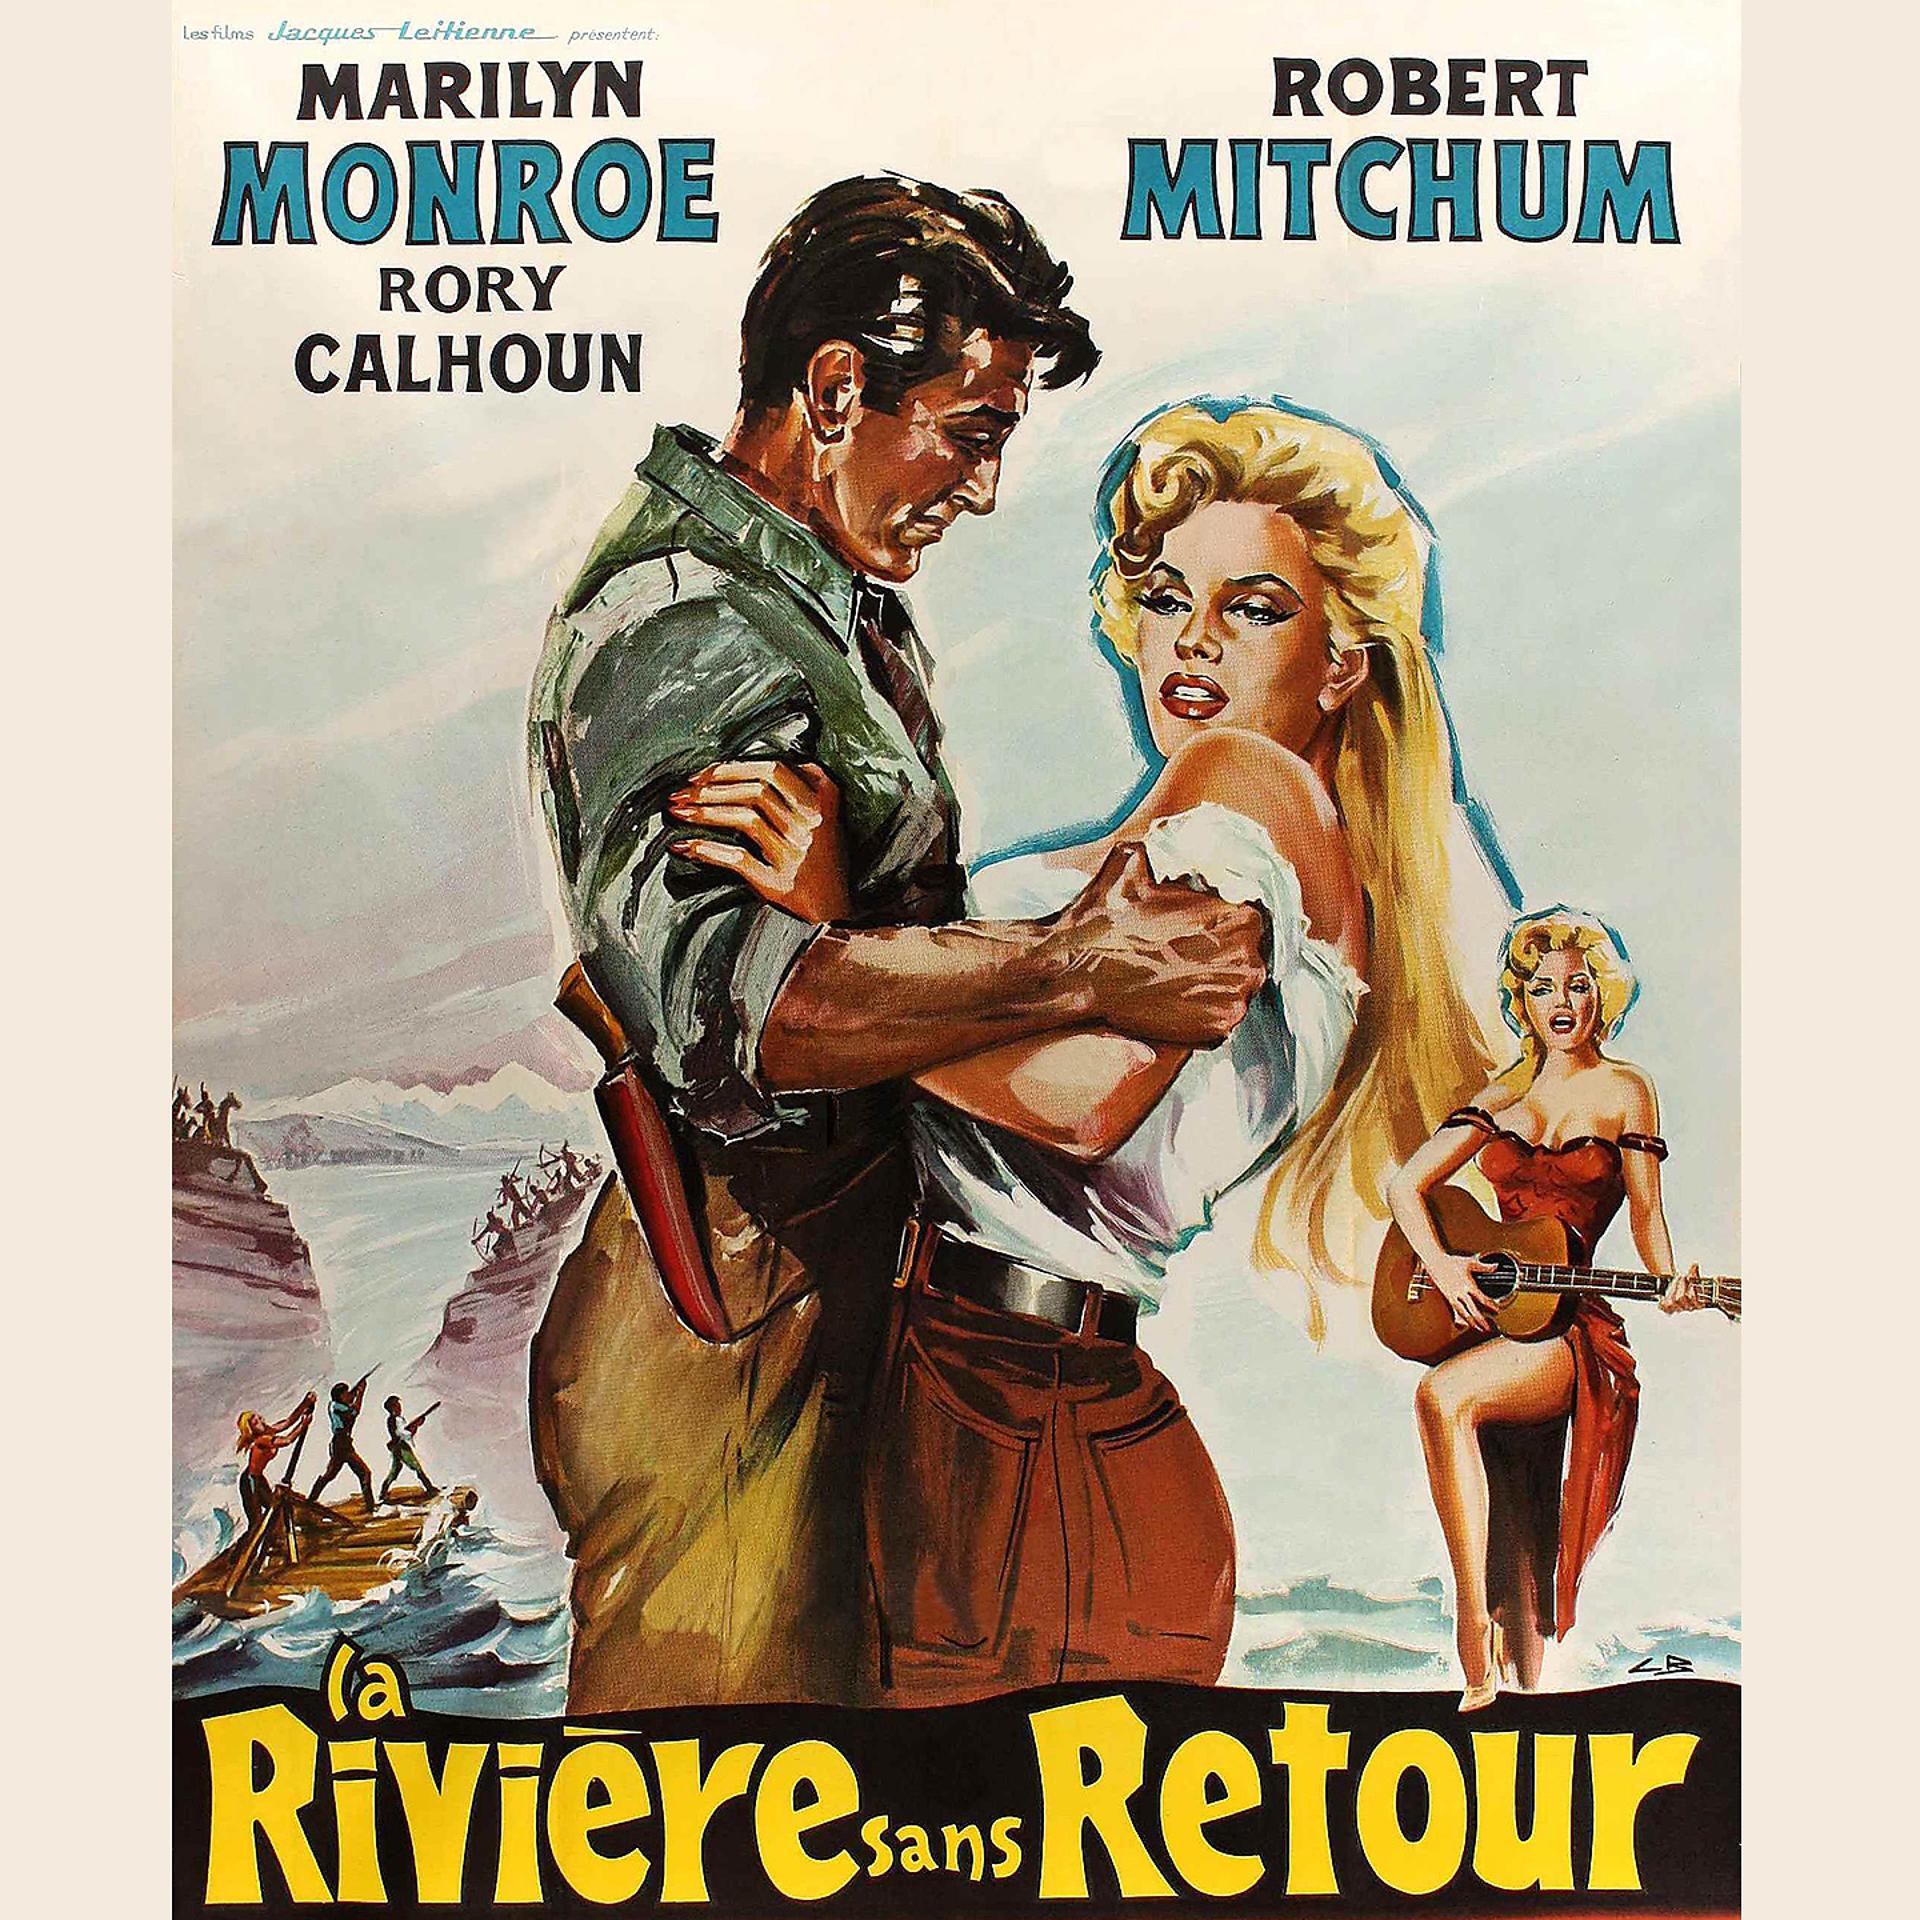 Постер альбома The River of No Return